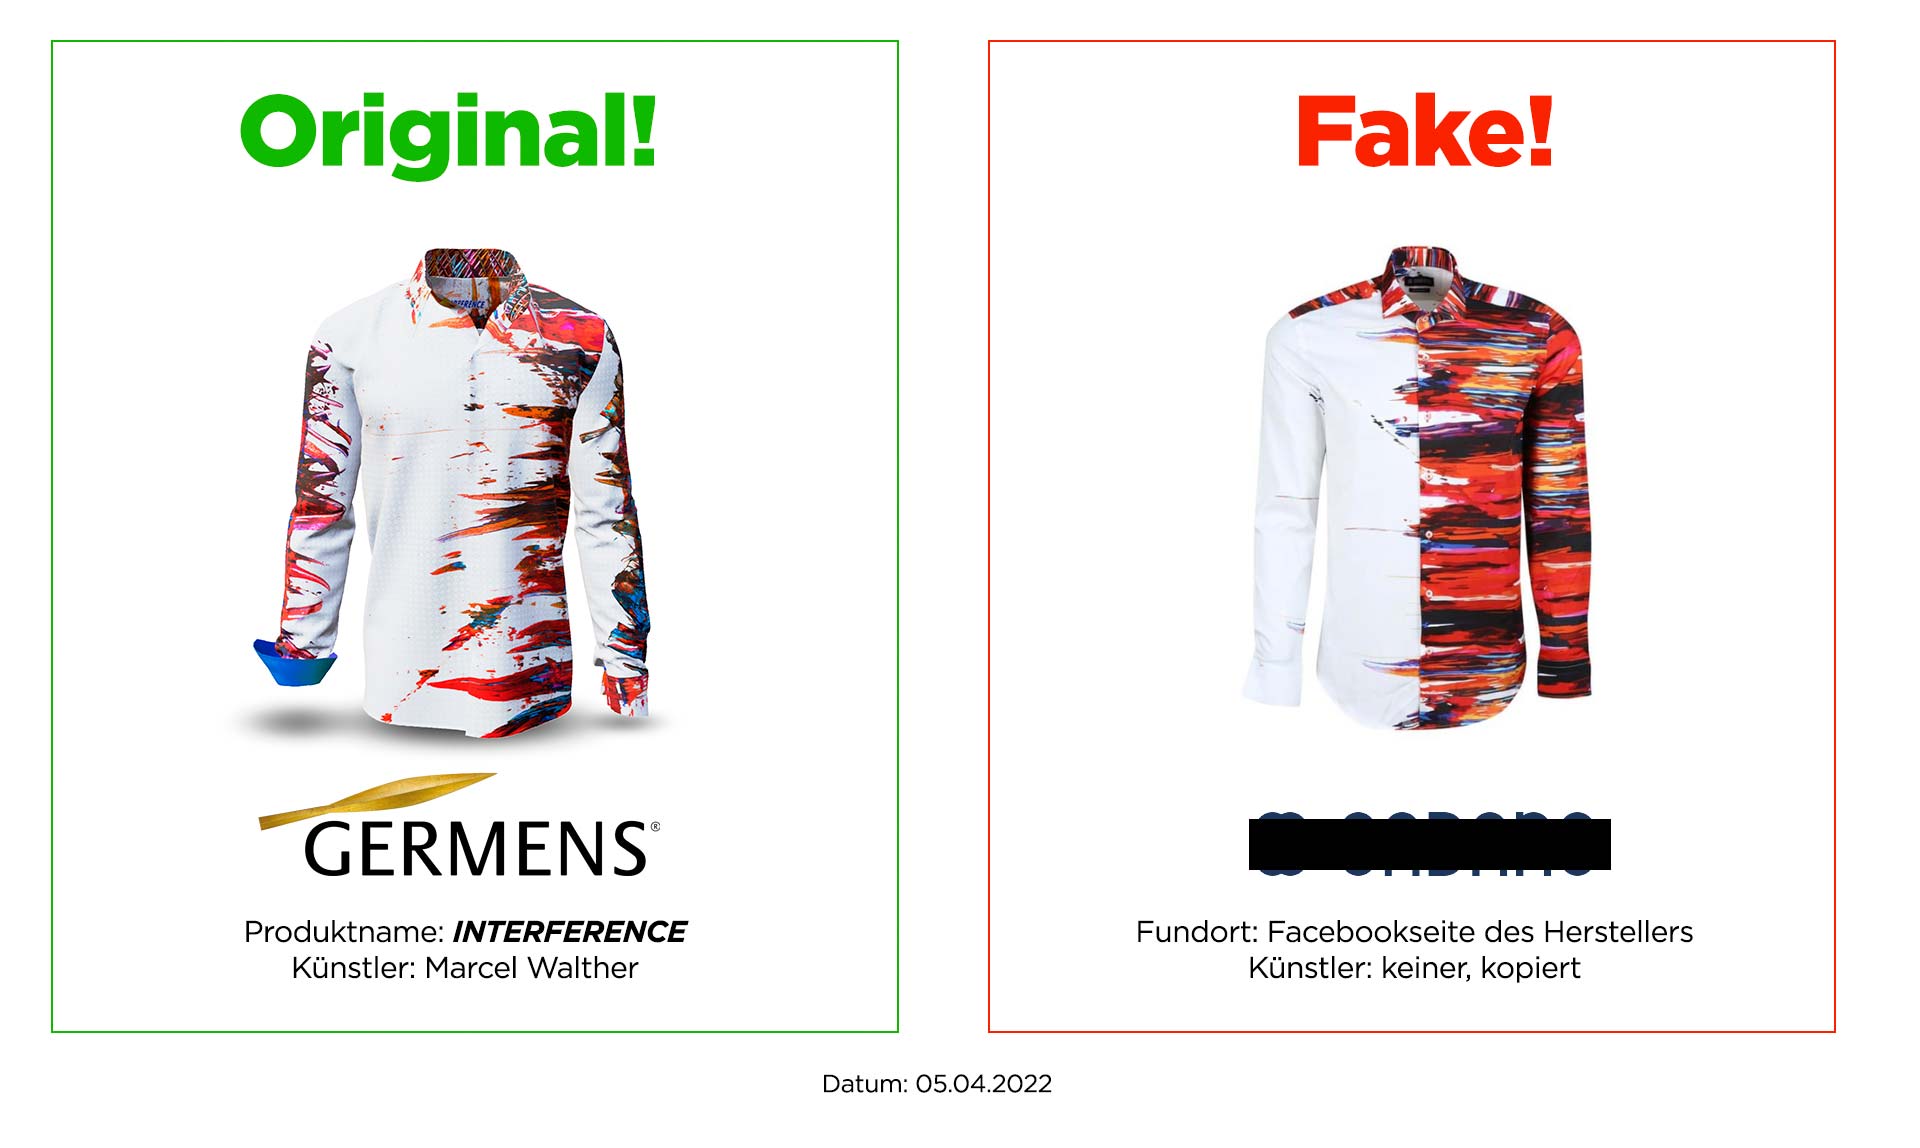 Original GERMENS® shirt INTERFERENCE and plagiarism